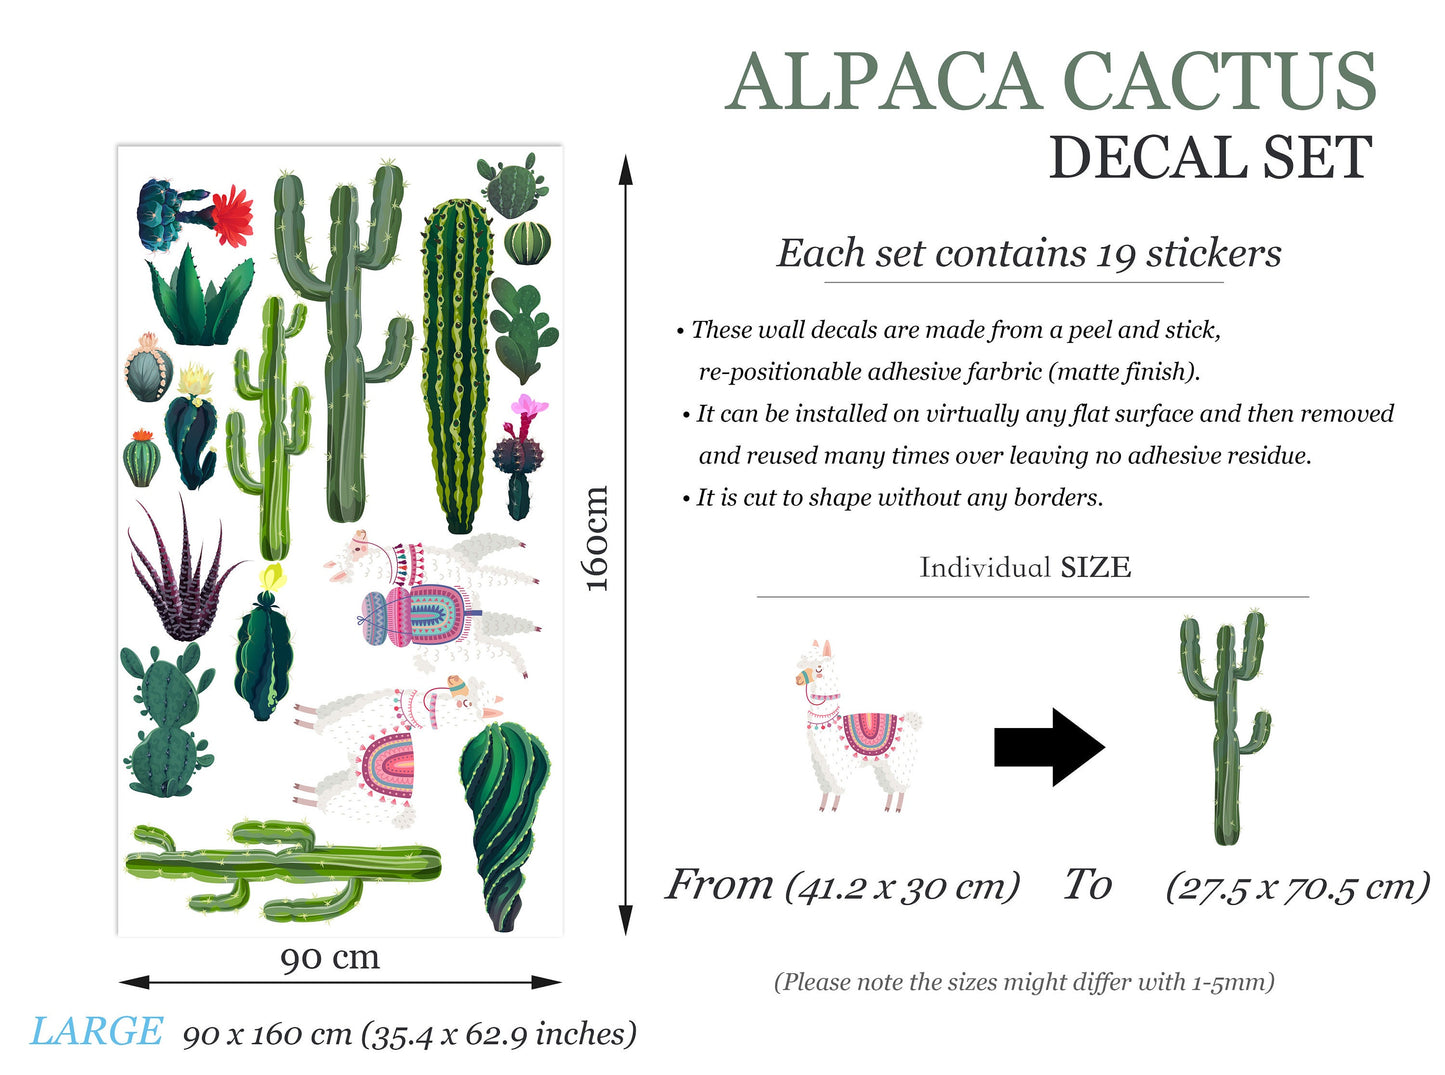 Cactus and Alpaca Wall Decal - Desert Plant and Llama Decor - BR354